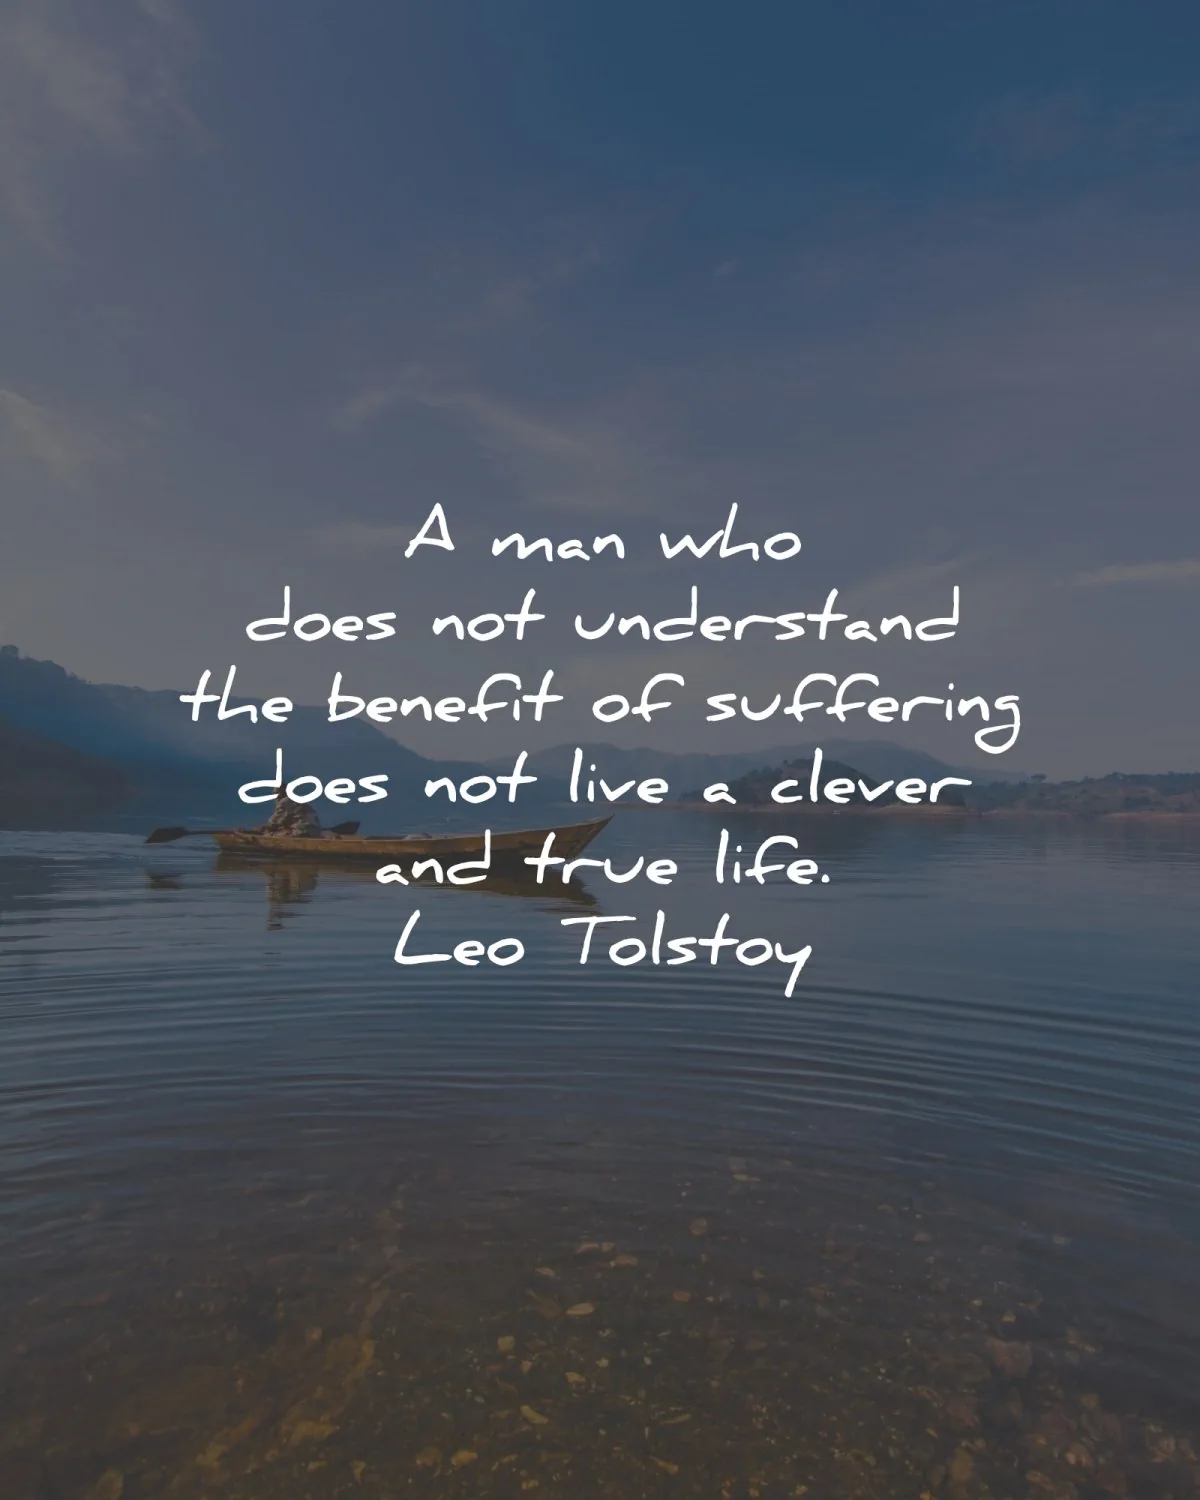 leo tolstoy quotes man understand benefit suffering wisdom